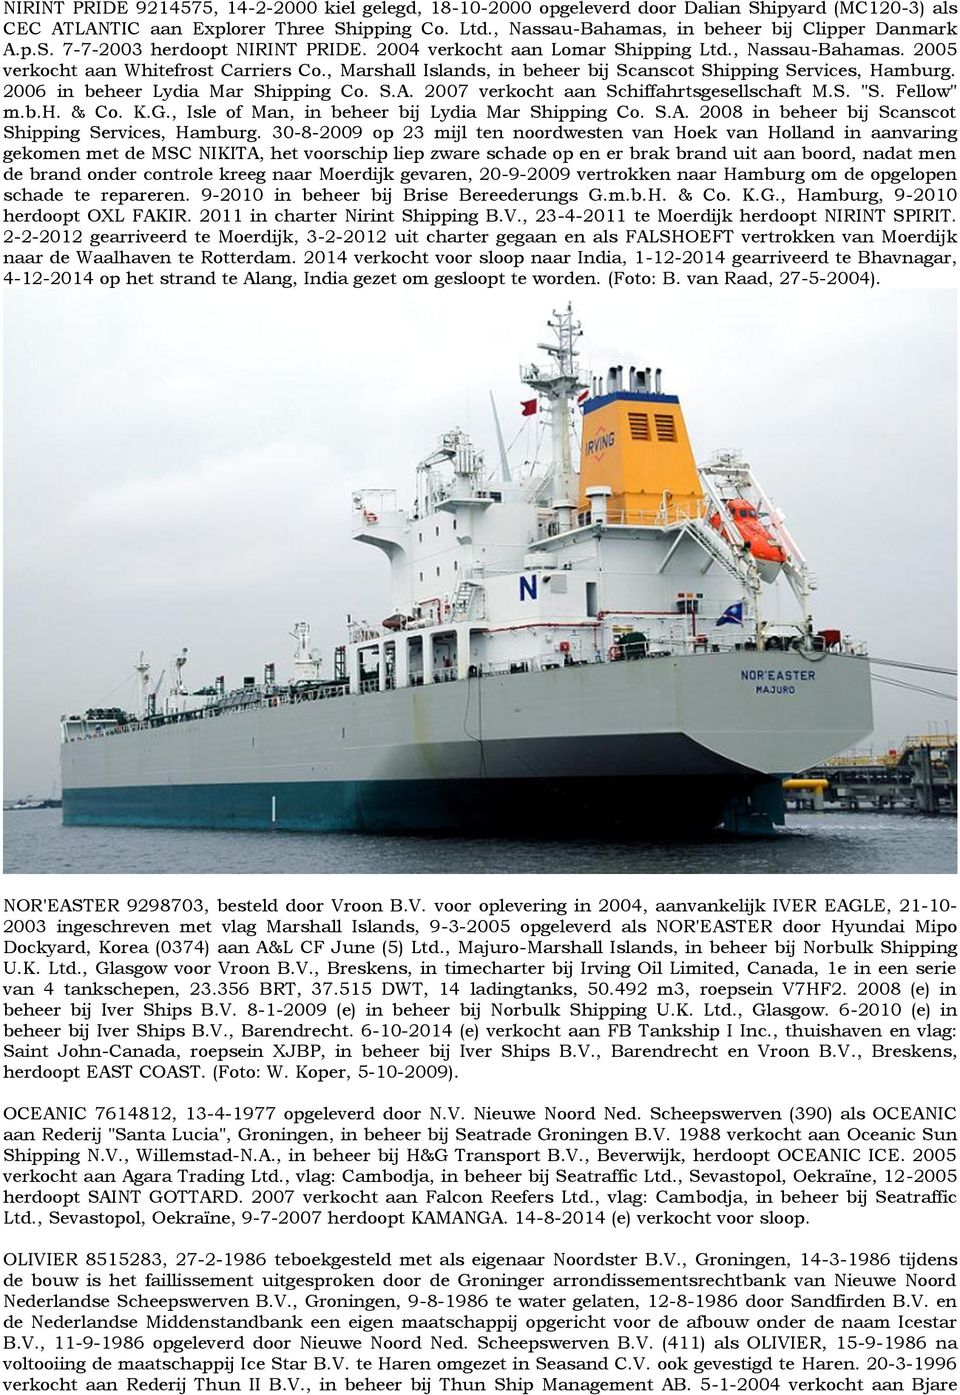 , Marshall Islands, in beheer bij Scanscot Shipping Services, Hamburg. 2006 in beheer Lydia Mar Shipping Co. S.A. 2007 verkocht aan Schiffahrtsgesellschaft M.S. "S. Fellow" m.b.h. & Co. K.G.